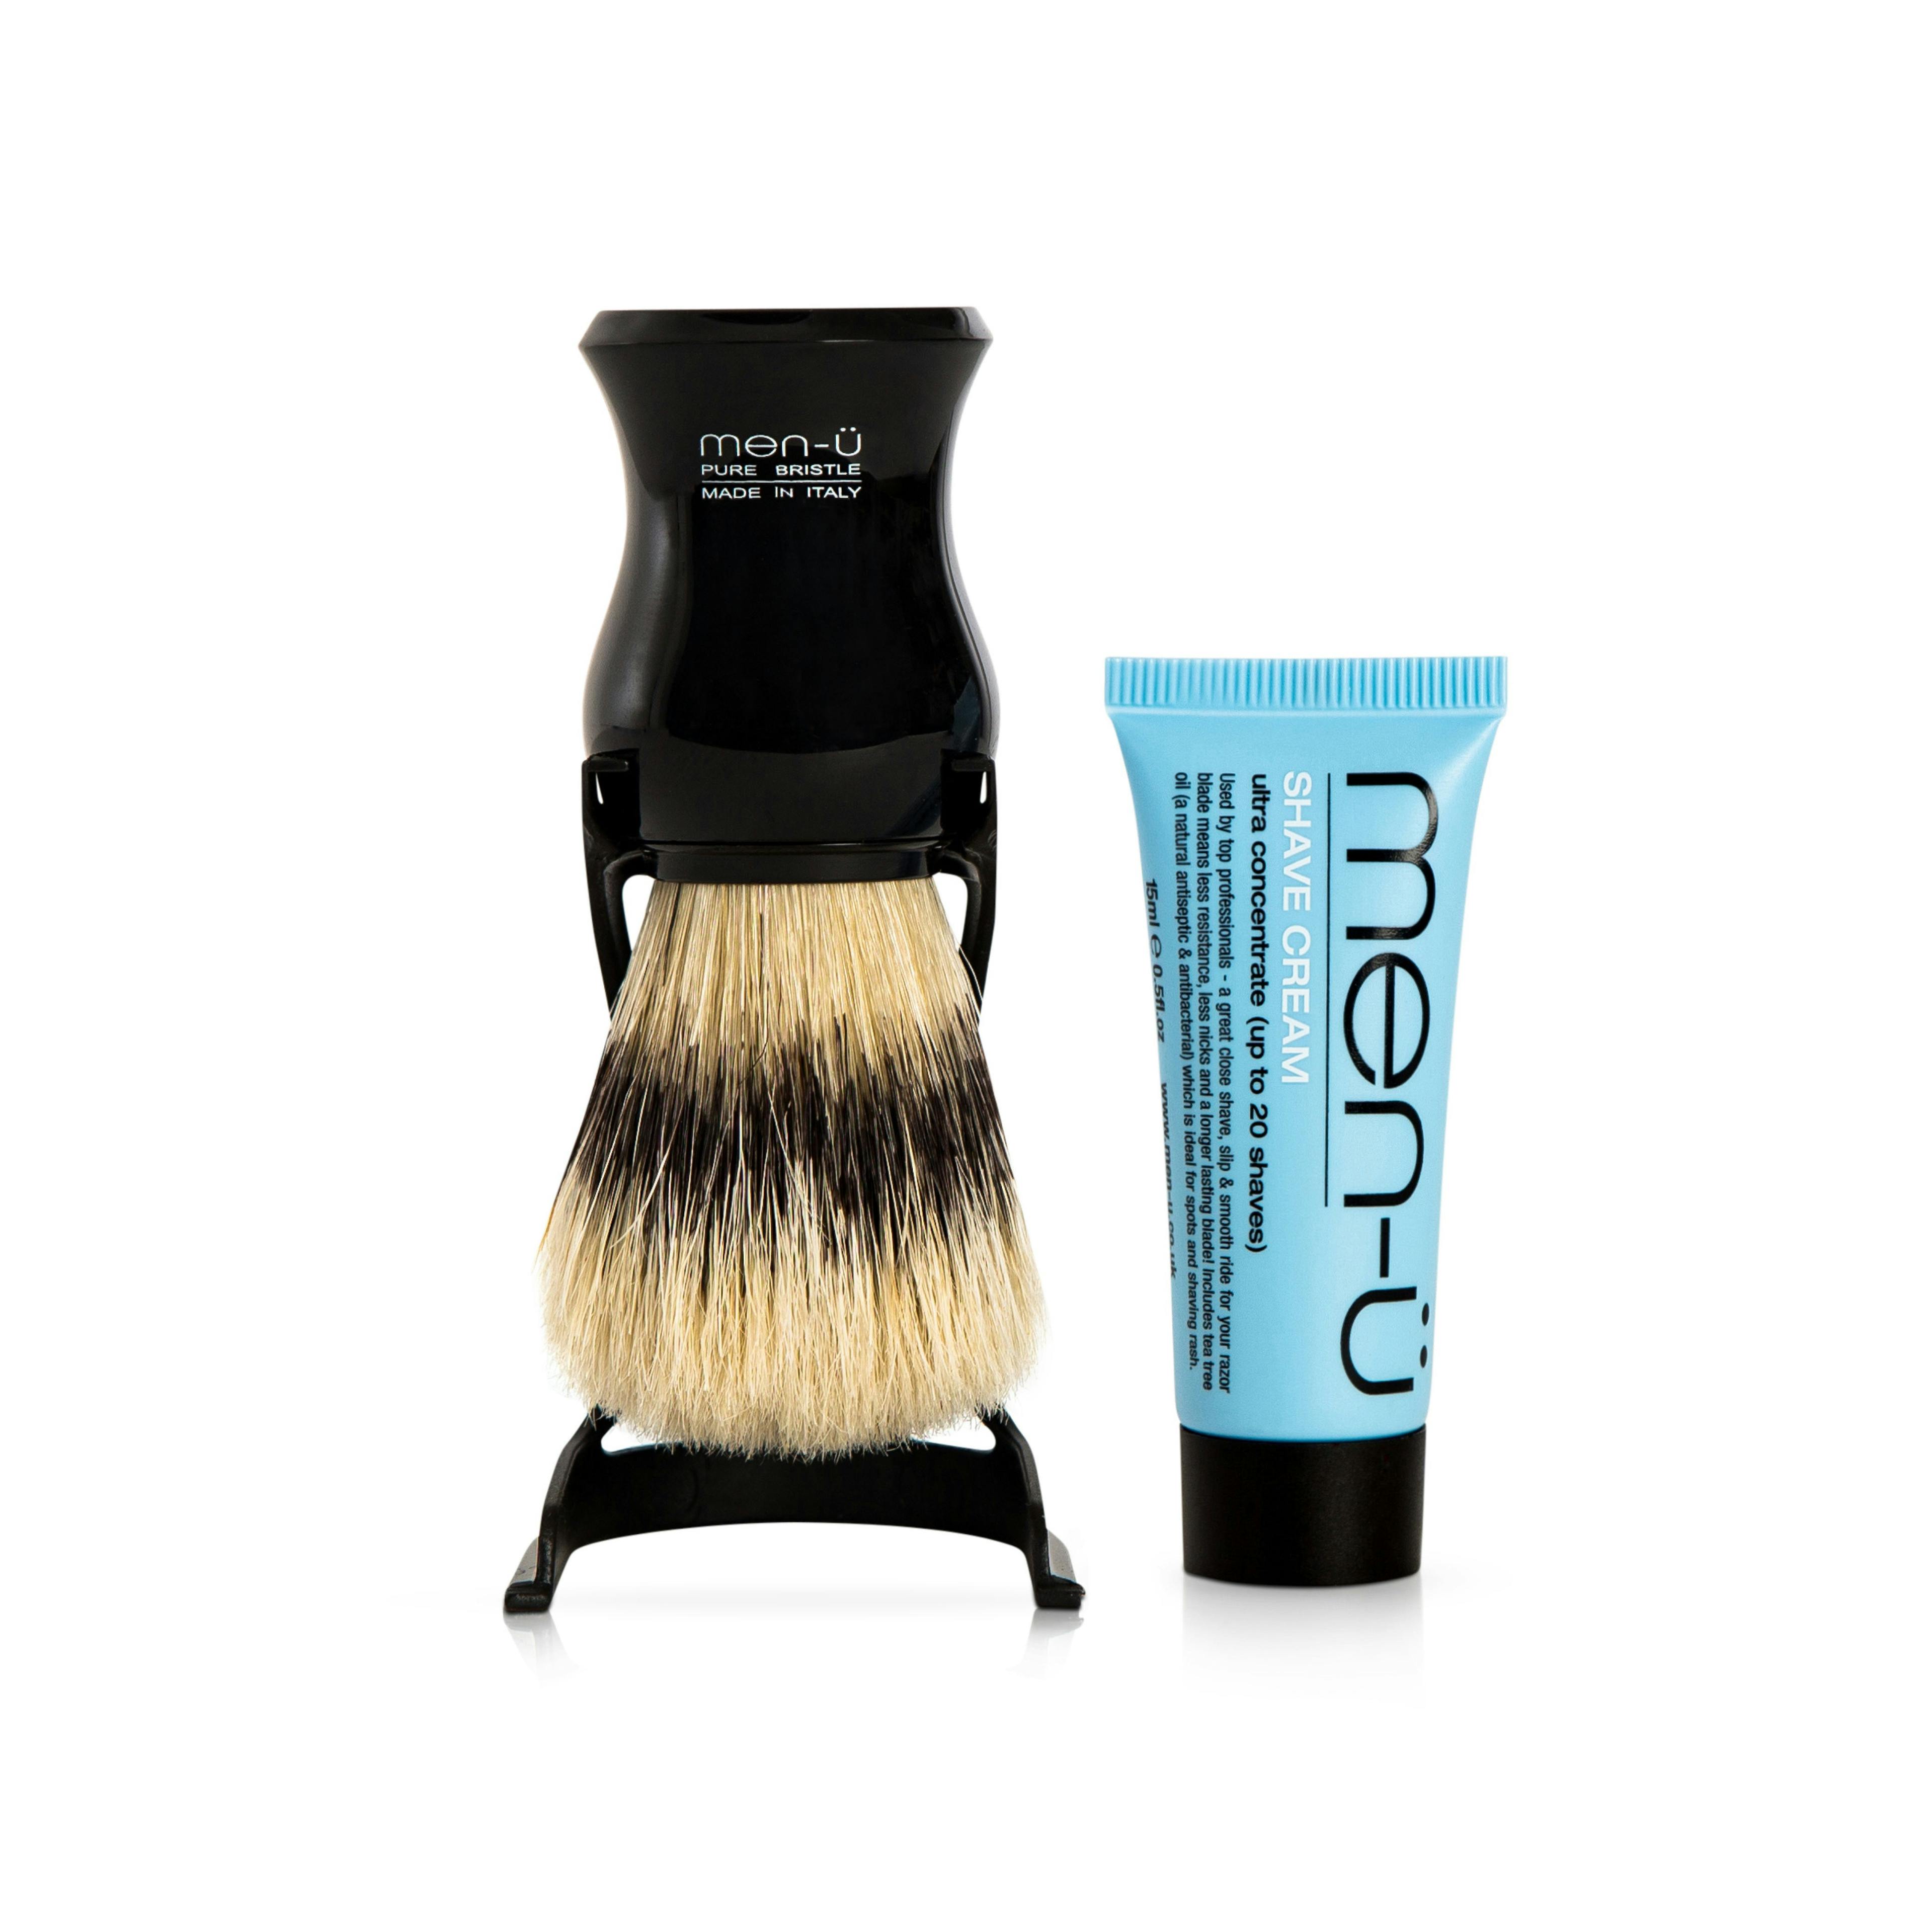 men-ü Barbiere Shaving Brush with Shave Cream 15ml & Stand - Black